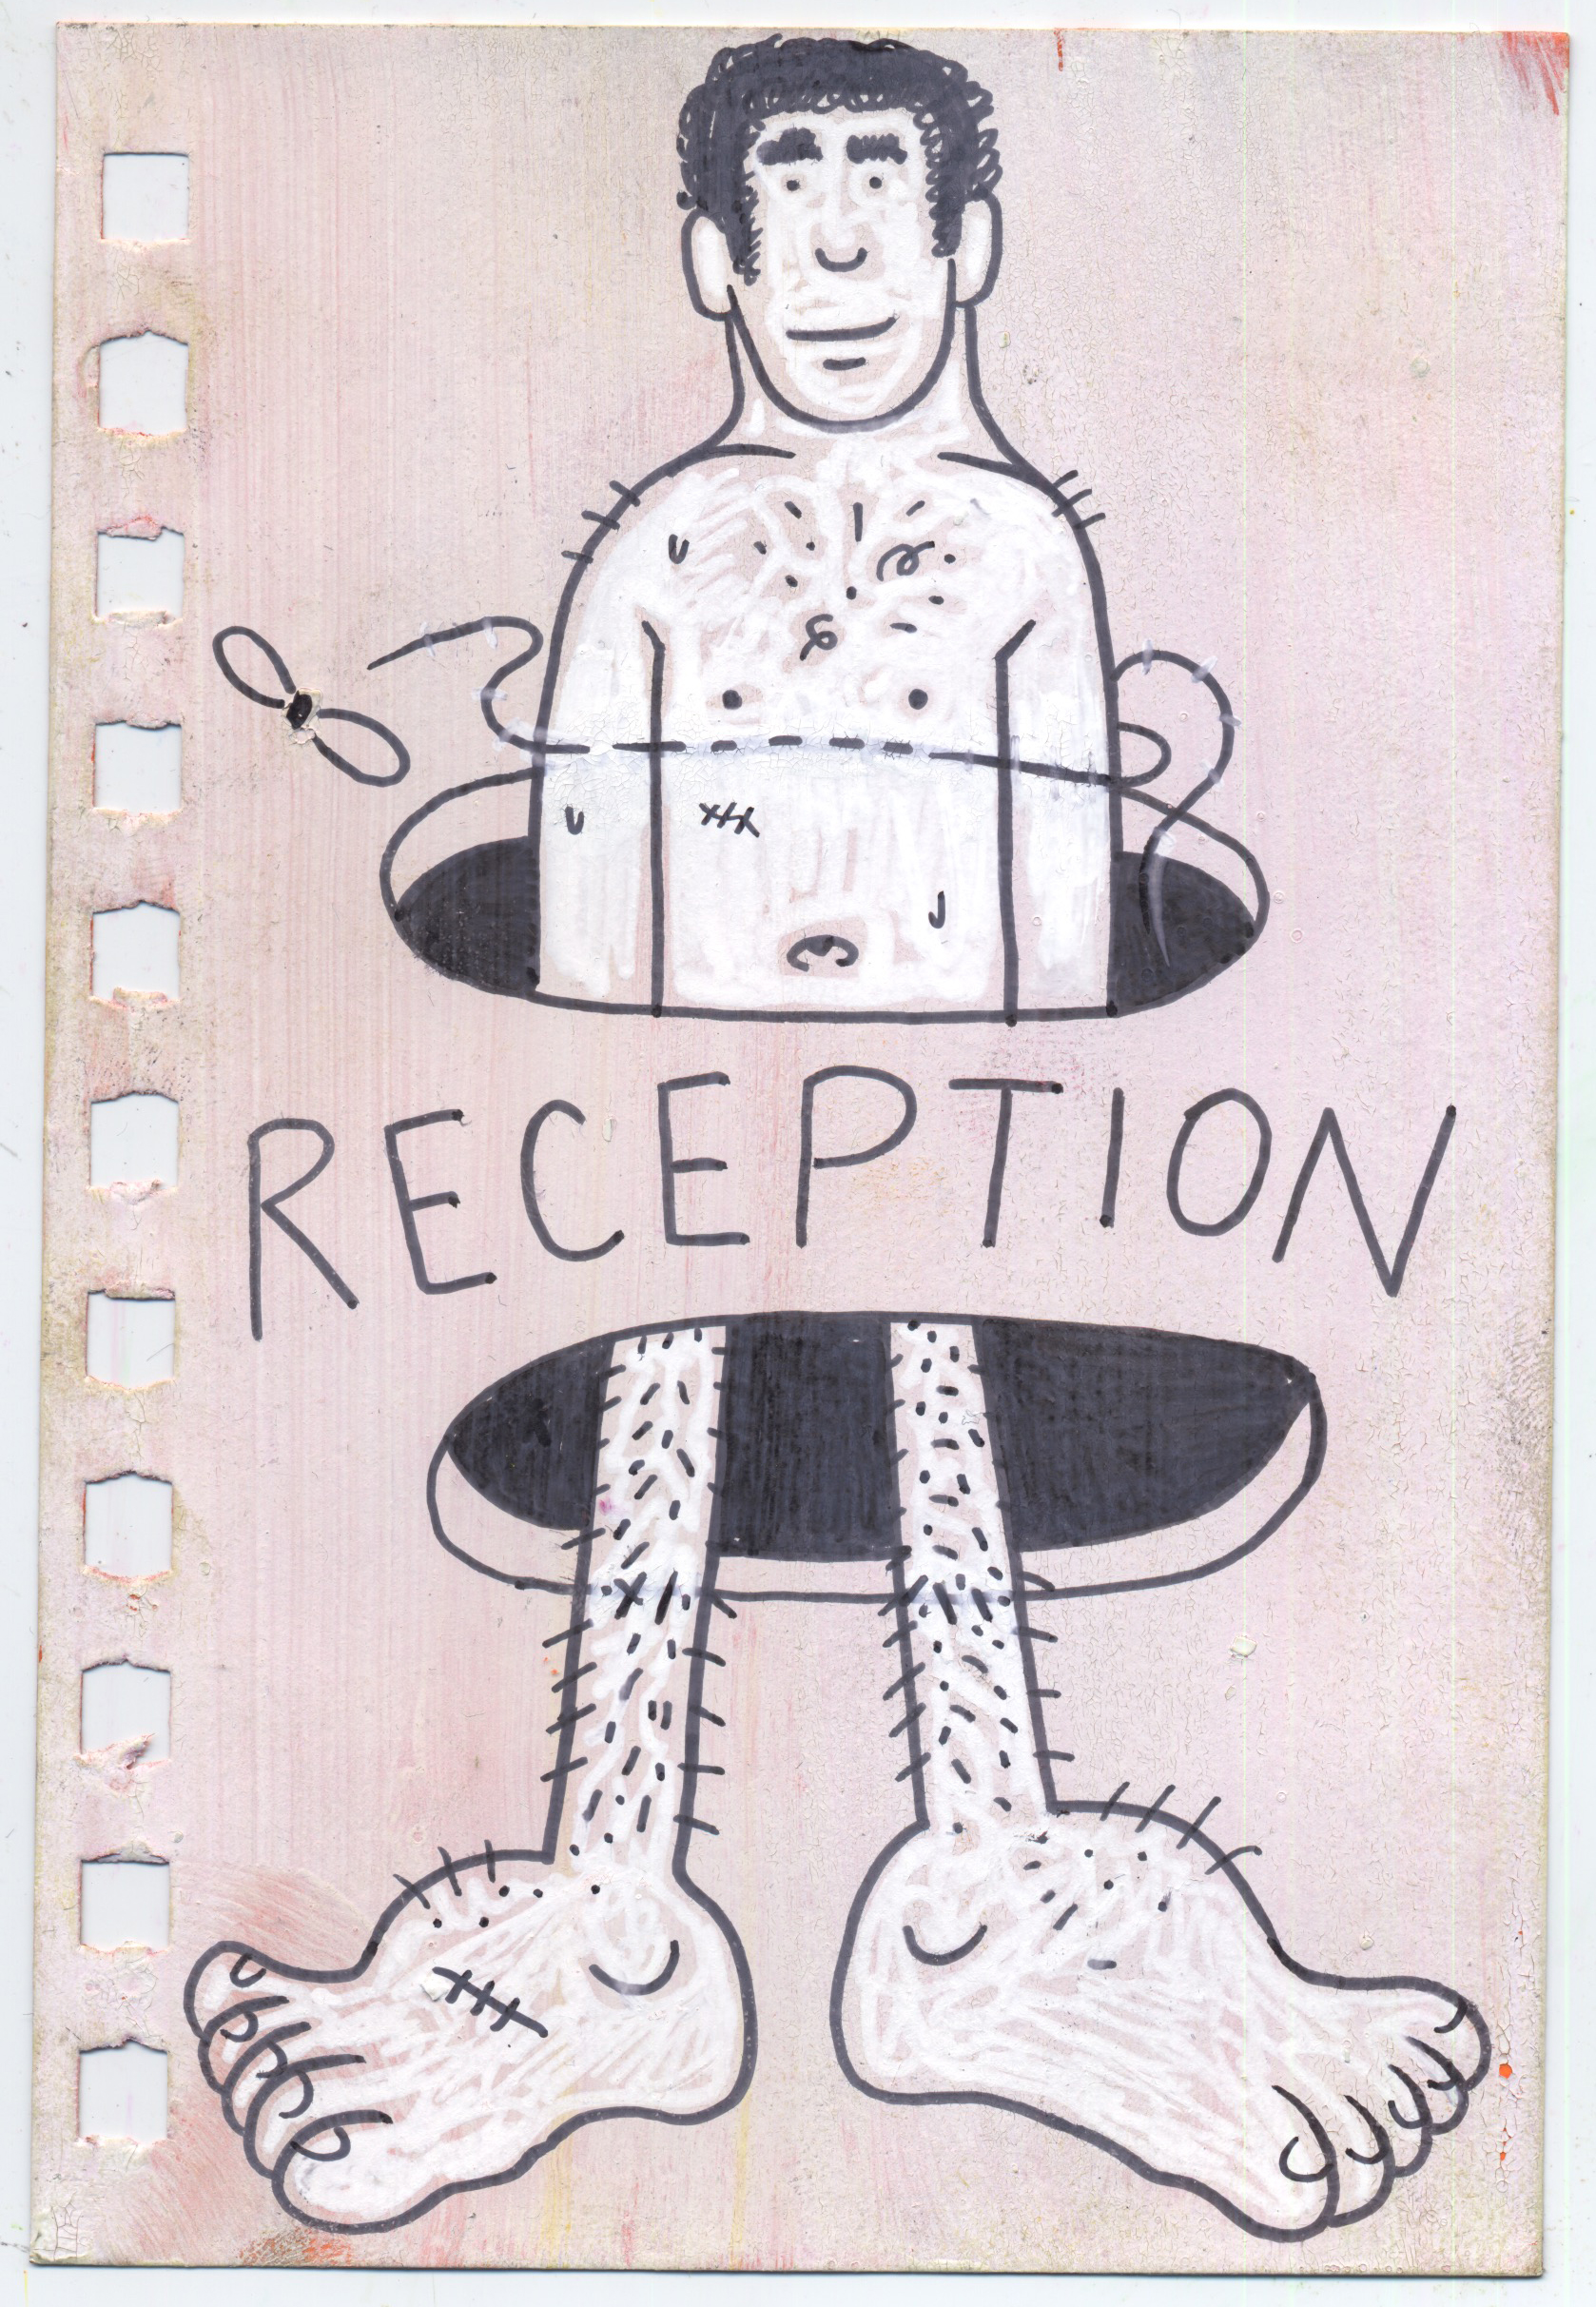 Reception (Hole)